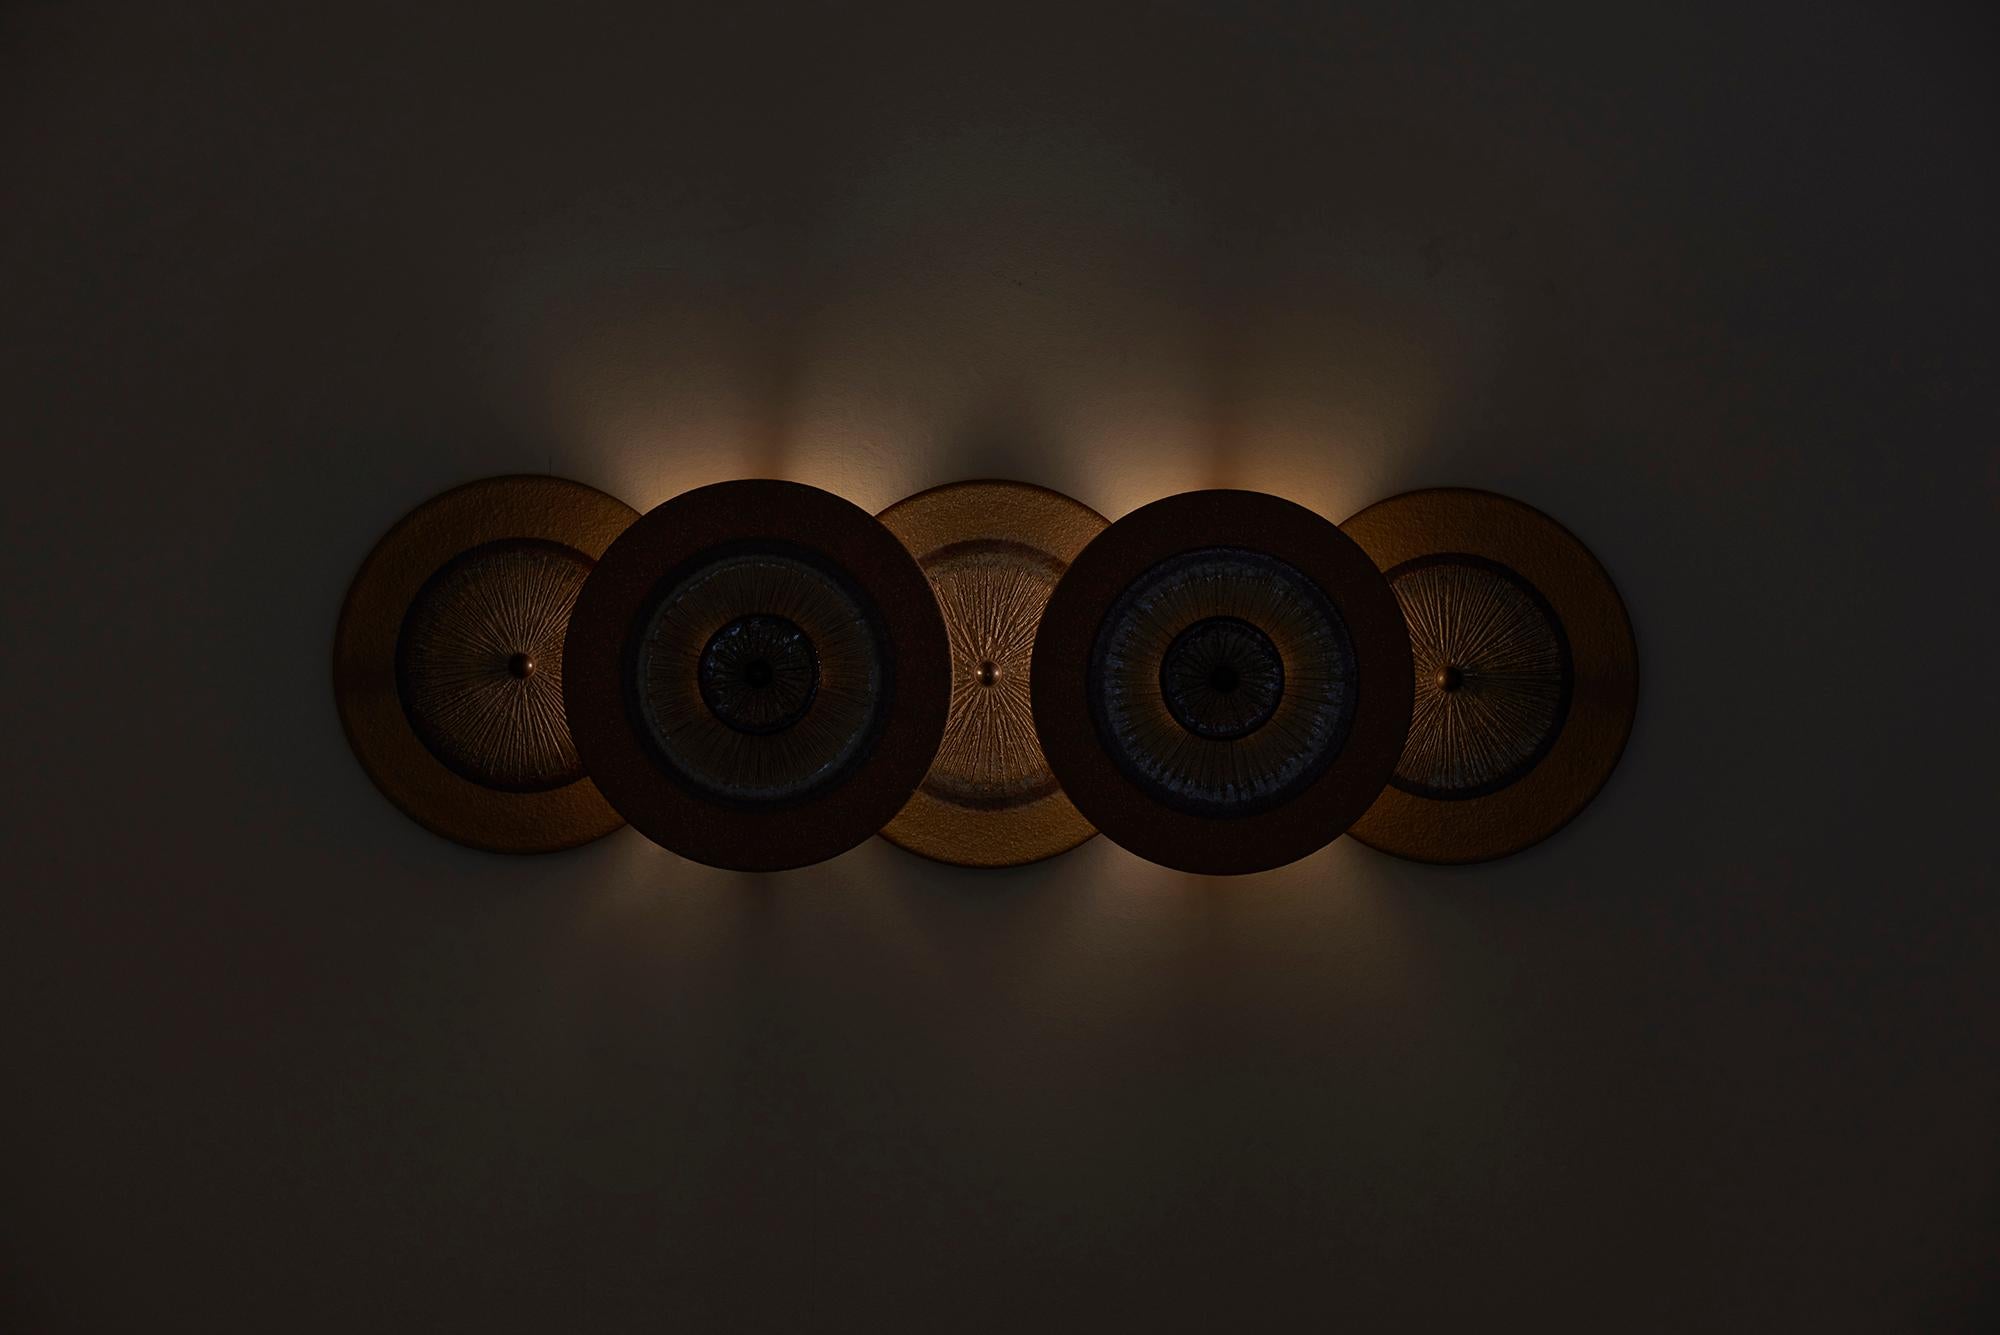 Set of 15 Ceramic Wall Lights by Noomi Backhausen & Poul Brandborg for Søholm 2